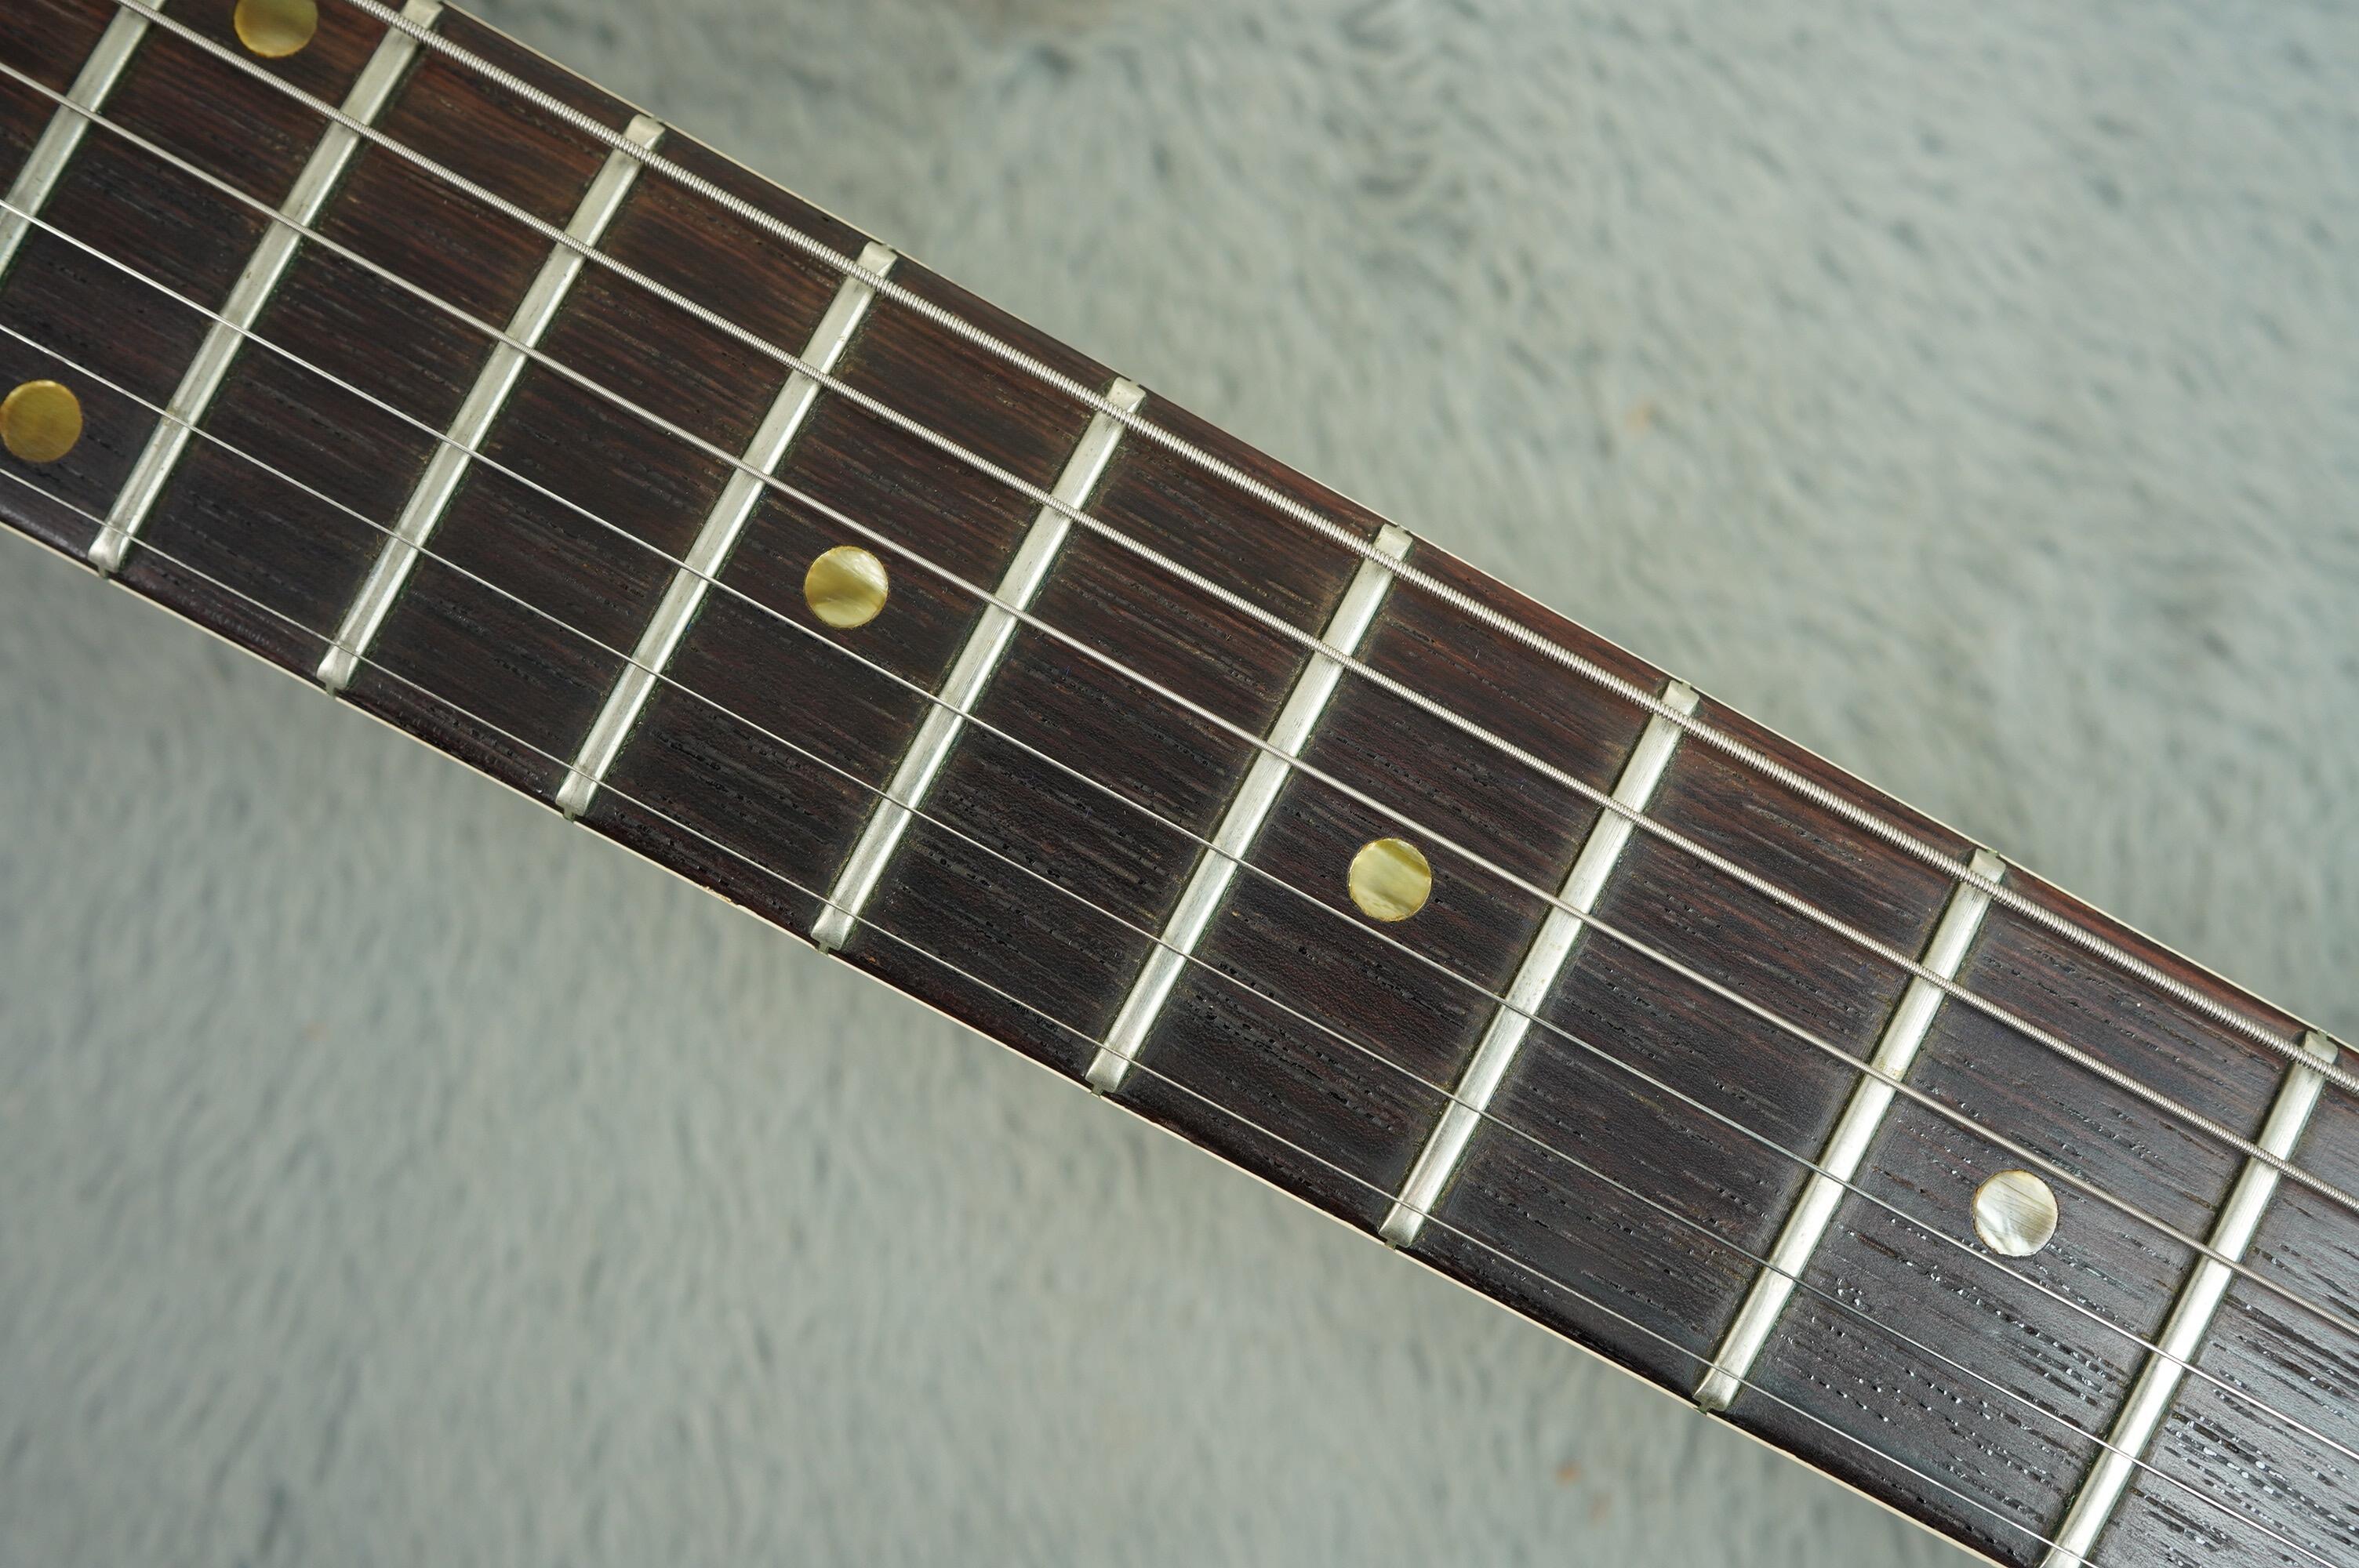 1965 Gibson SG junior Polaris White 64 spec